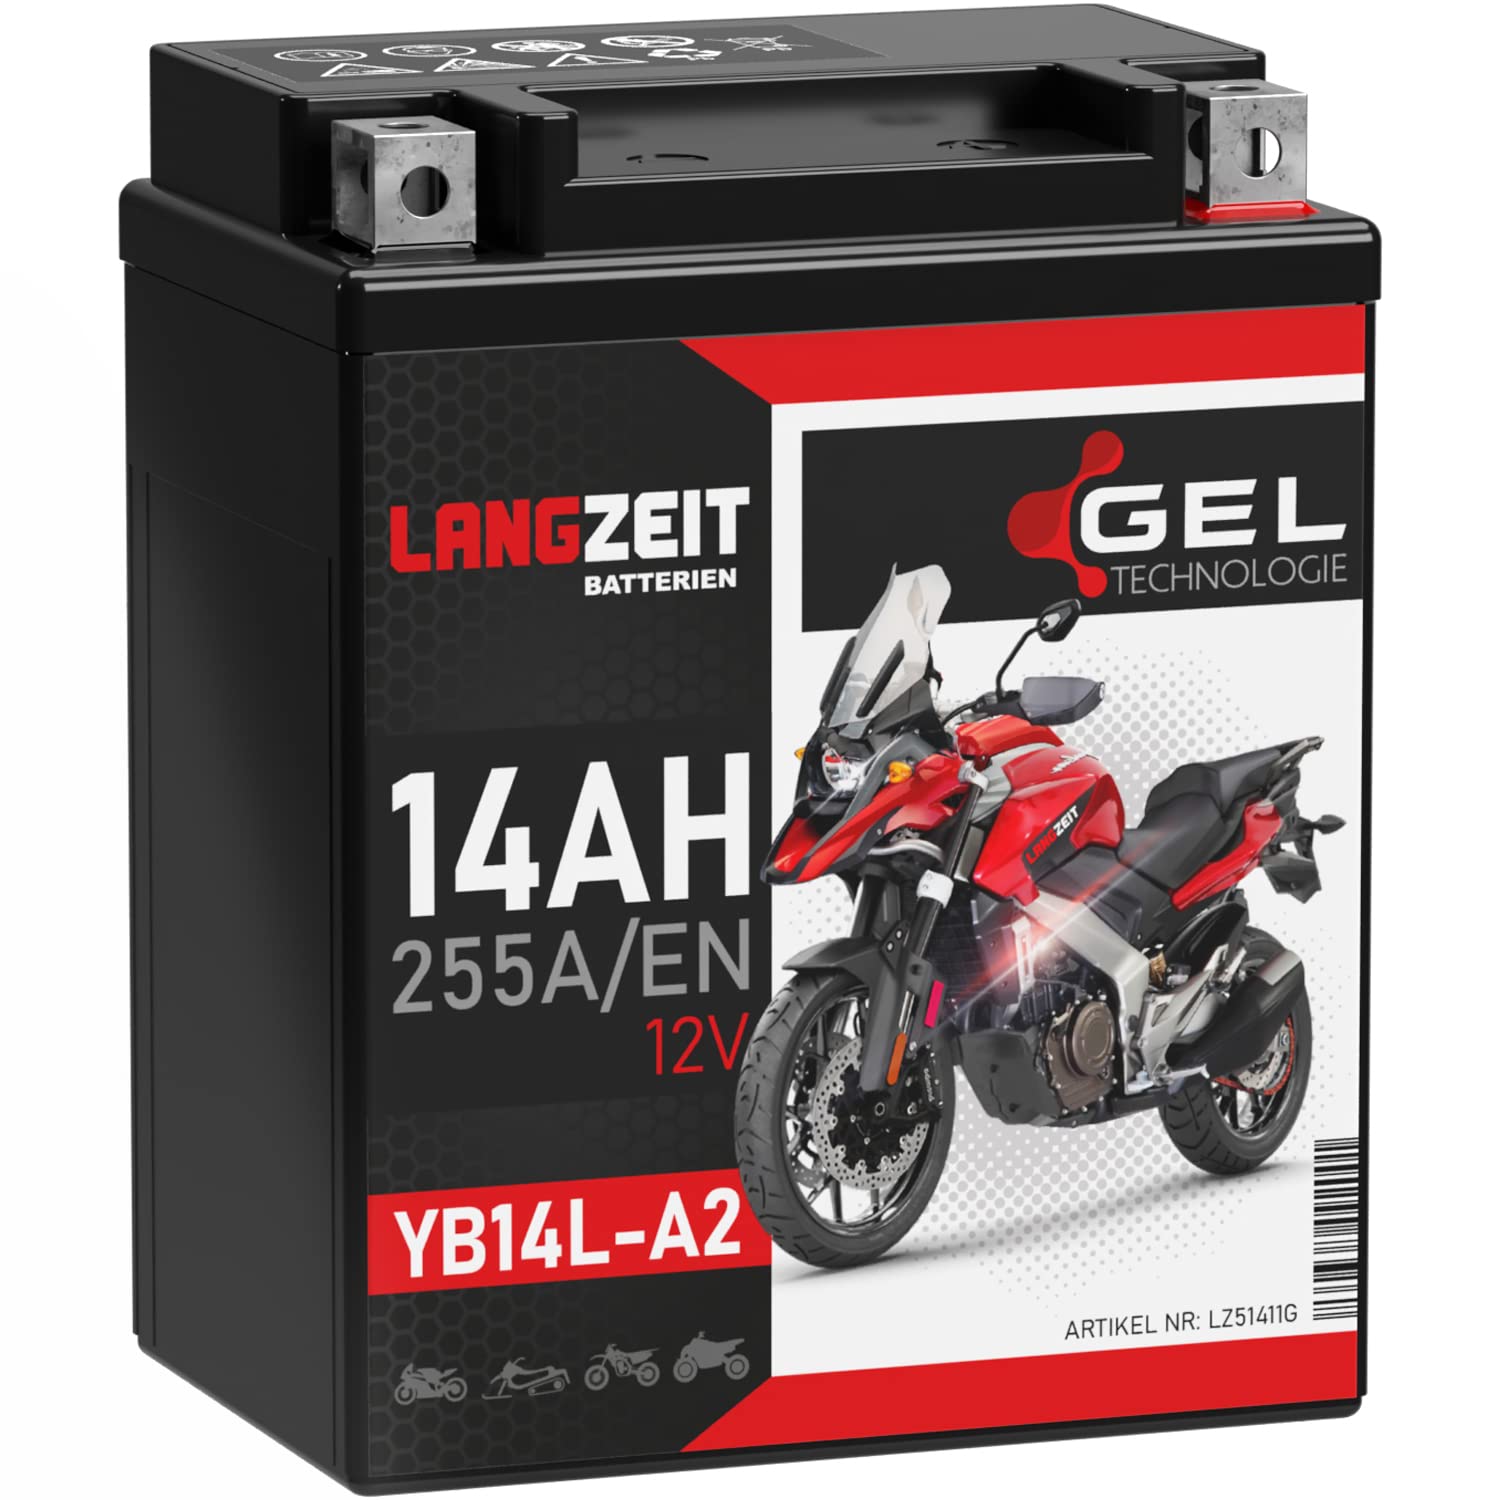 LANGZEIT YB14L-A2 GEL Motorradbatterie 12V 14Ah 255A/EN GEL Batterie 12V 51411 12N14-3A FB14L-A2 doppelte Lebensdauer vorgeladen auslaufsicher wartungsfrei von LANGZEIT Batterien